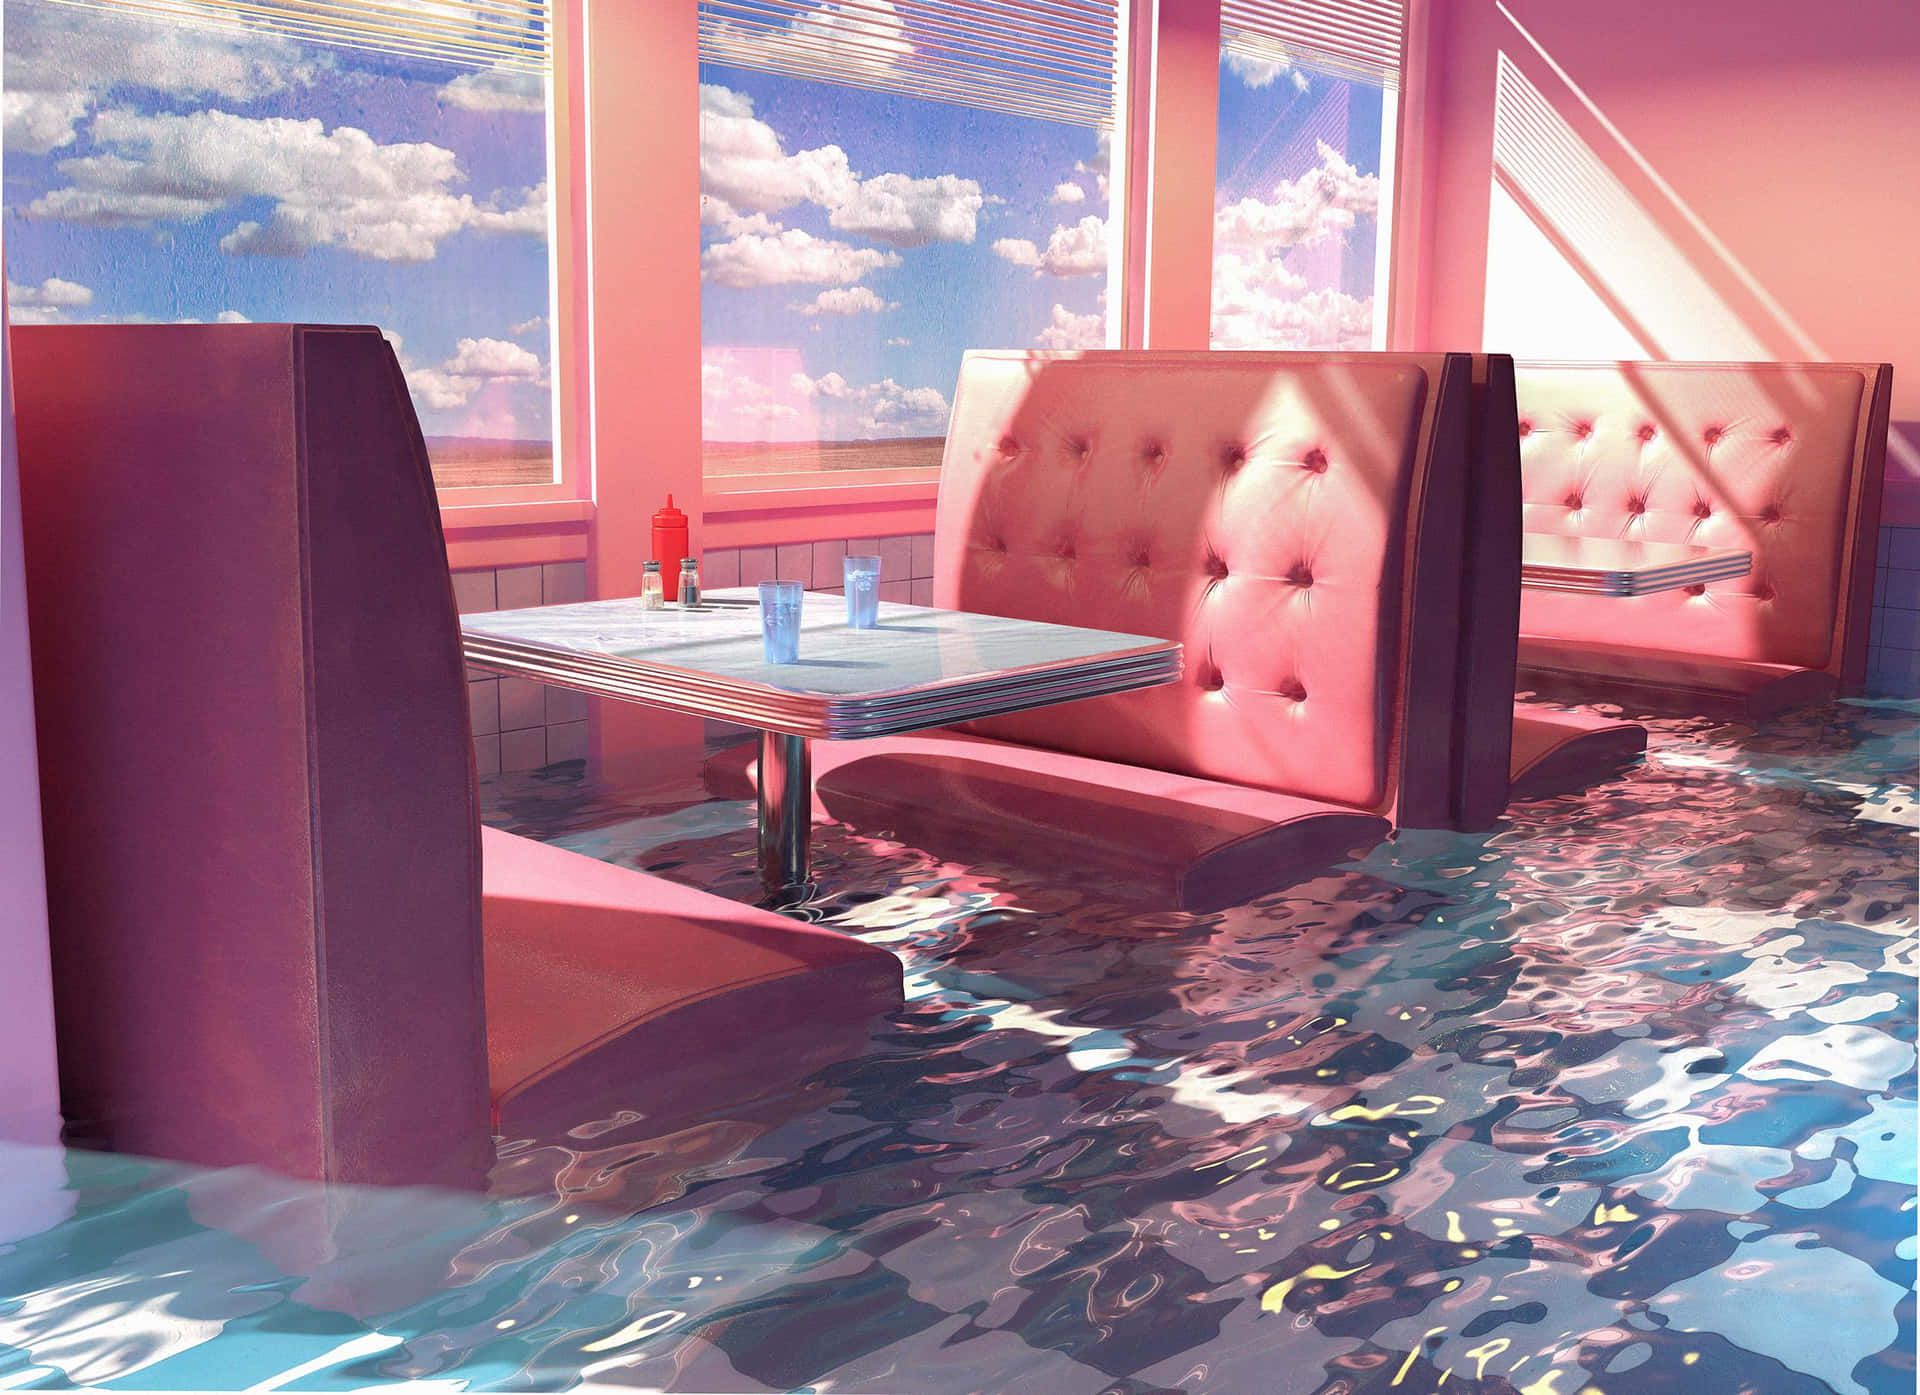 Flooded Diner Illusion Wallpaper